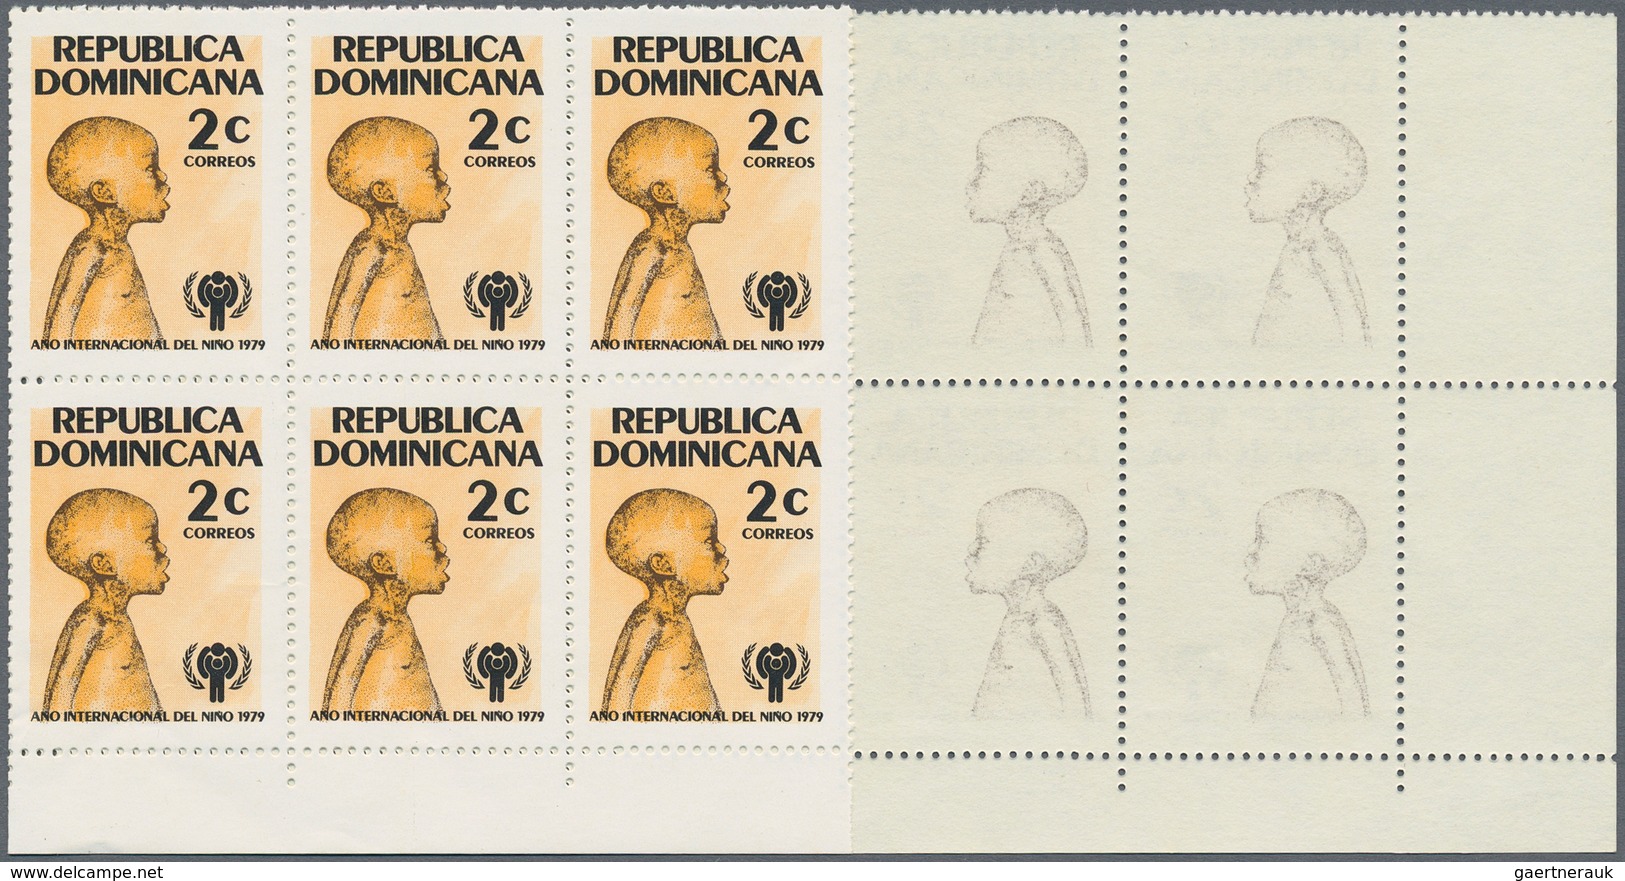 Thematische Philatelie: 1936/2005, Dominican Republic. Large stock of imperforate proof progressive